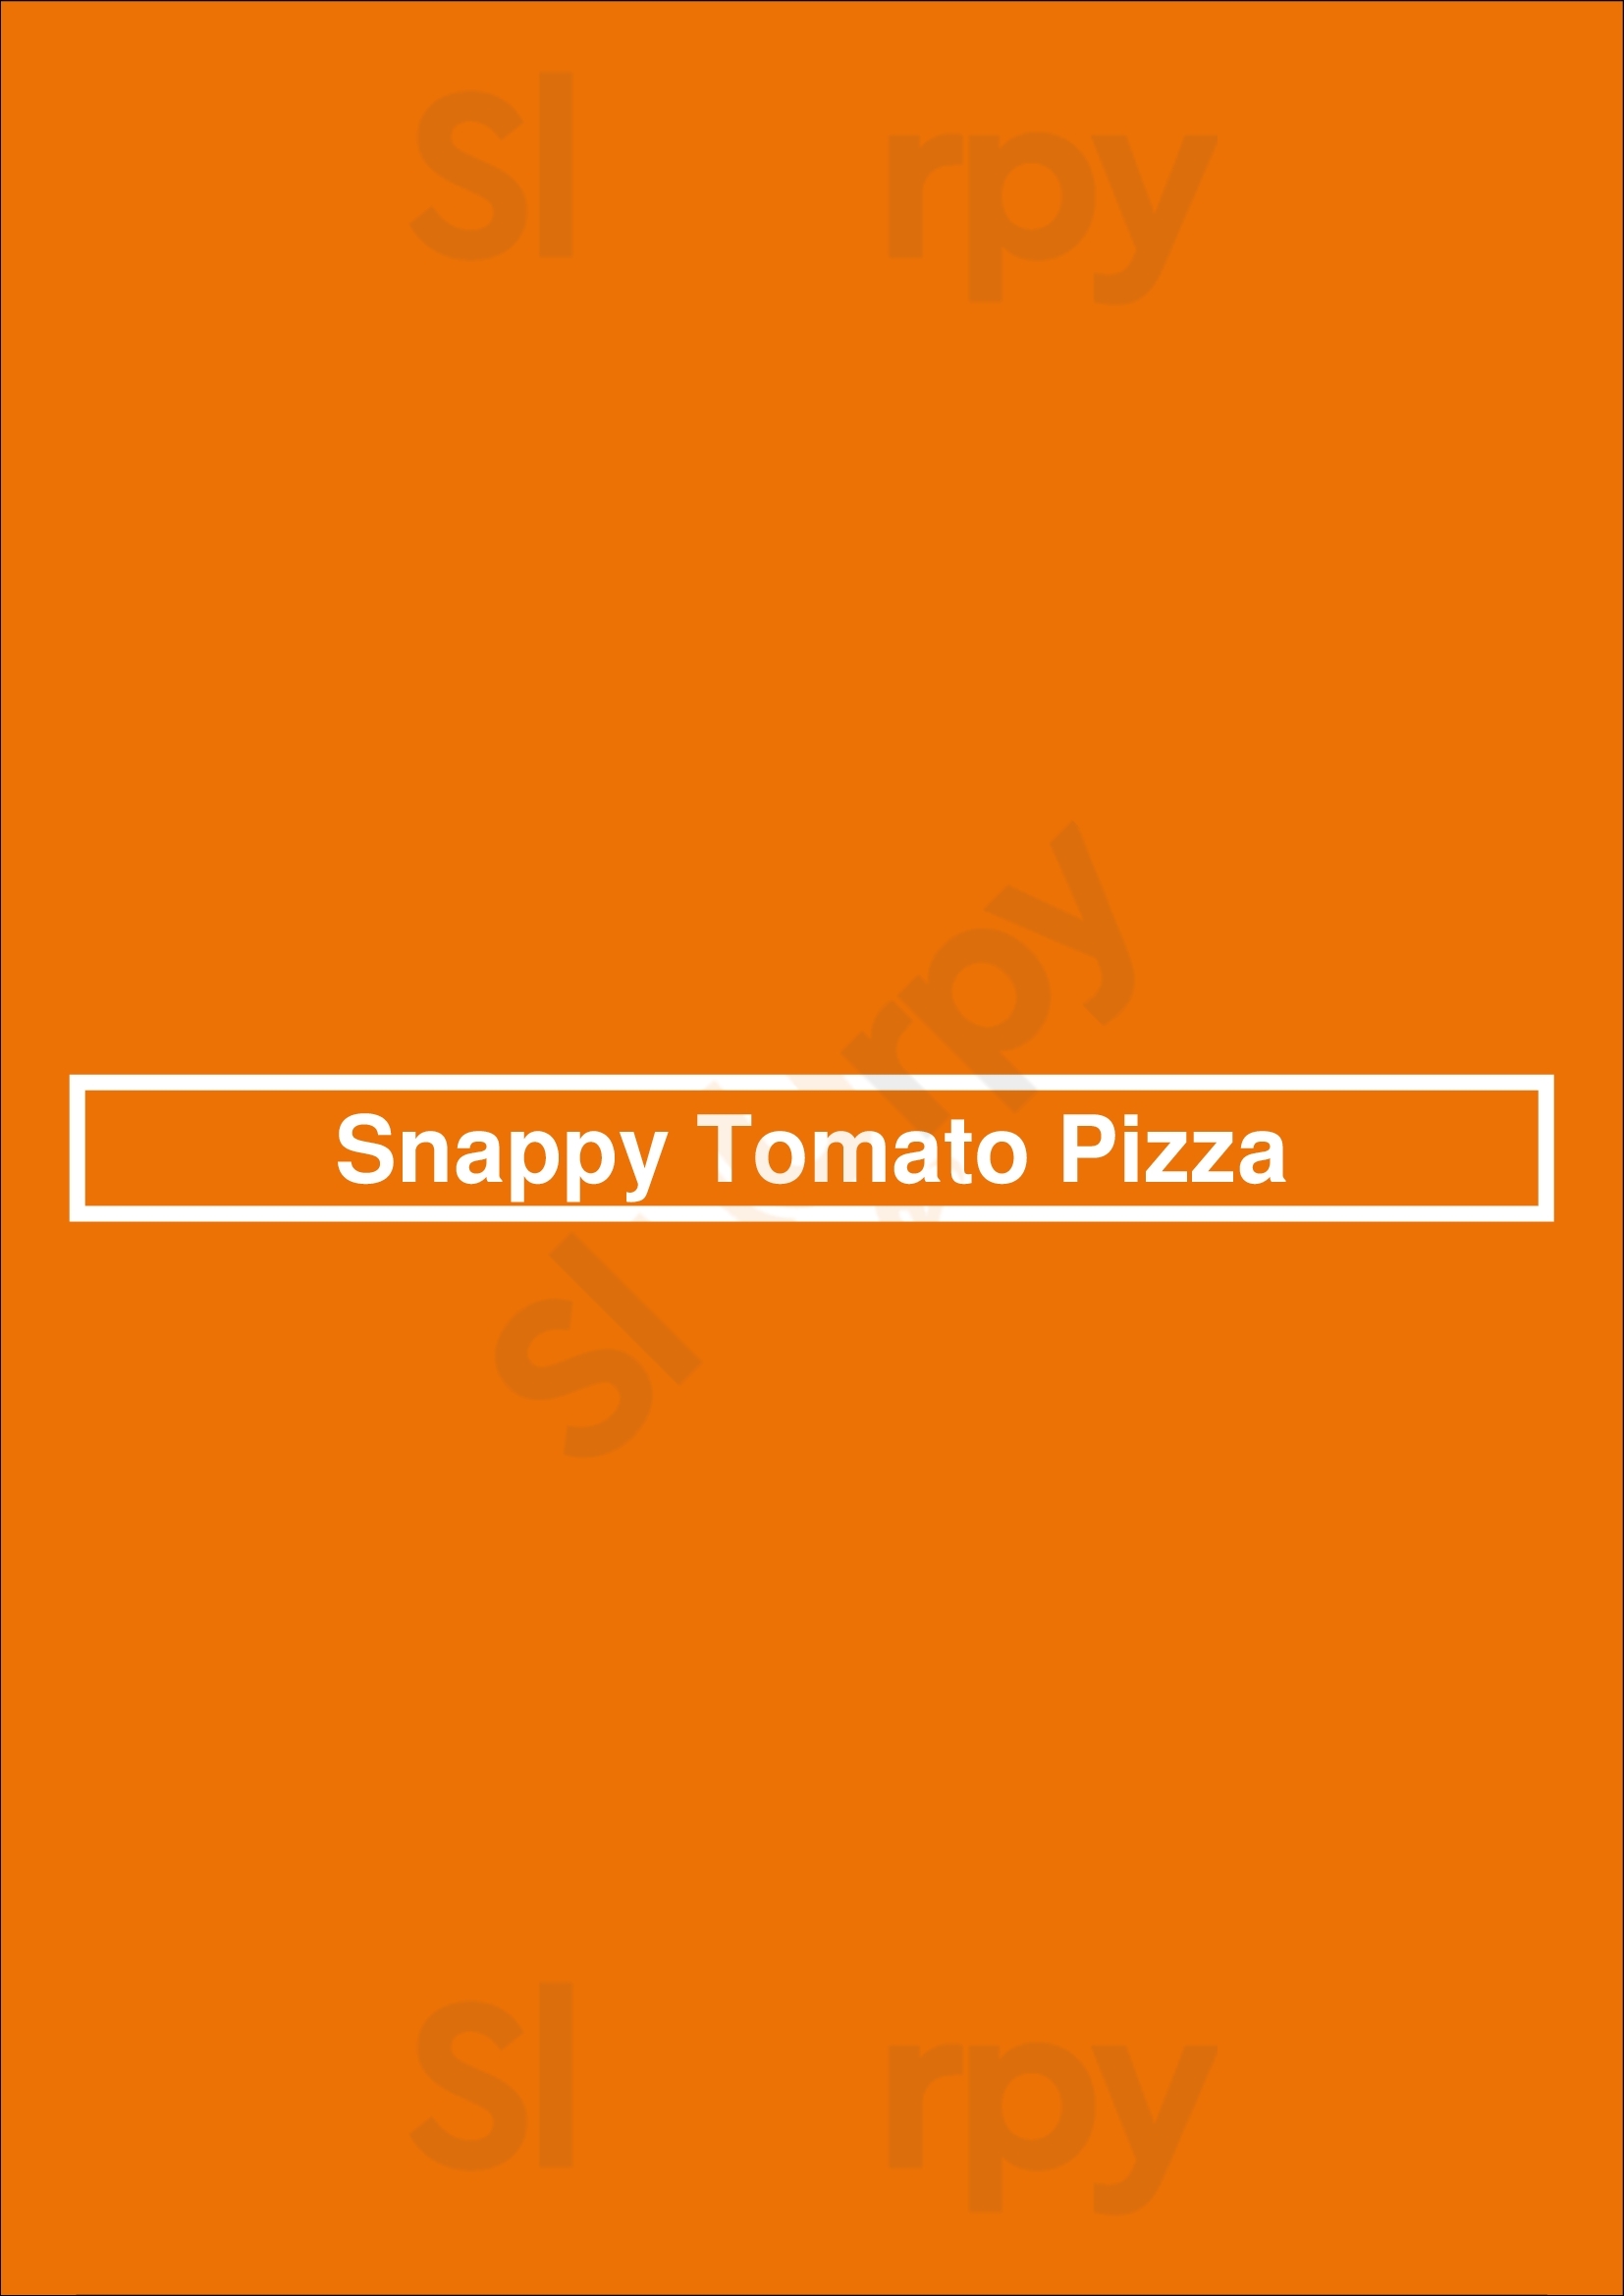 Snappy Tomato Pizza Birmingham Menu - 1